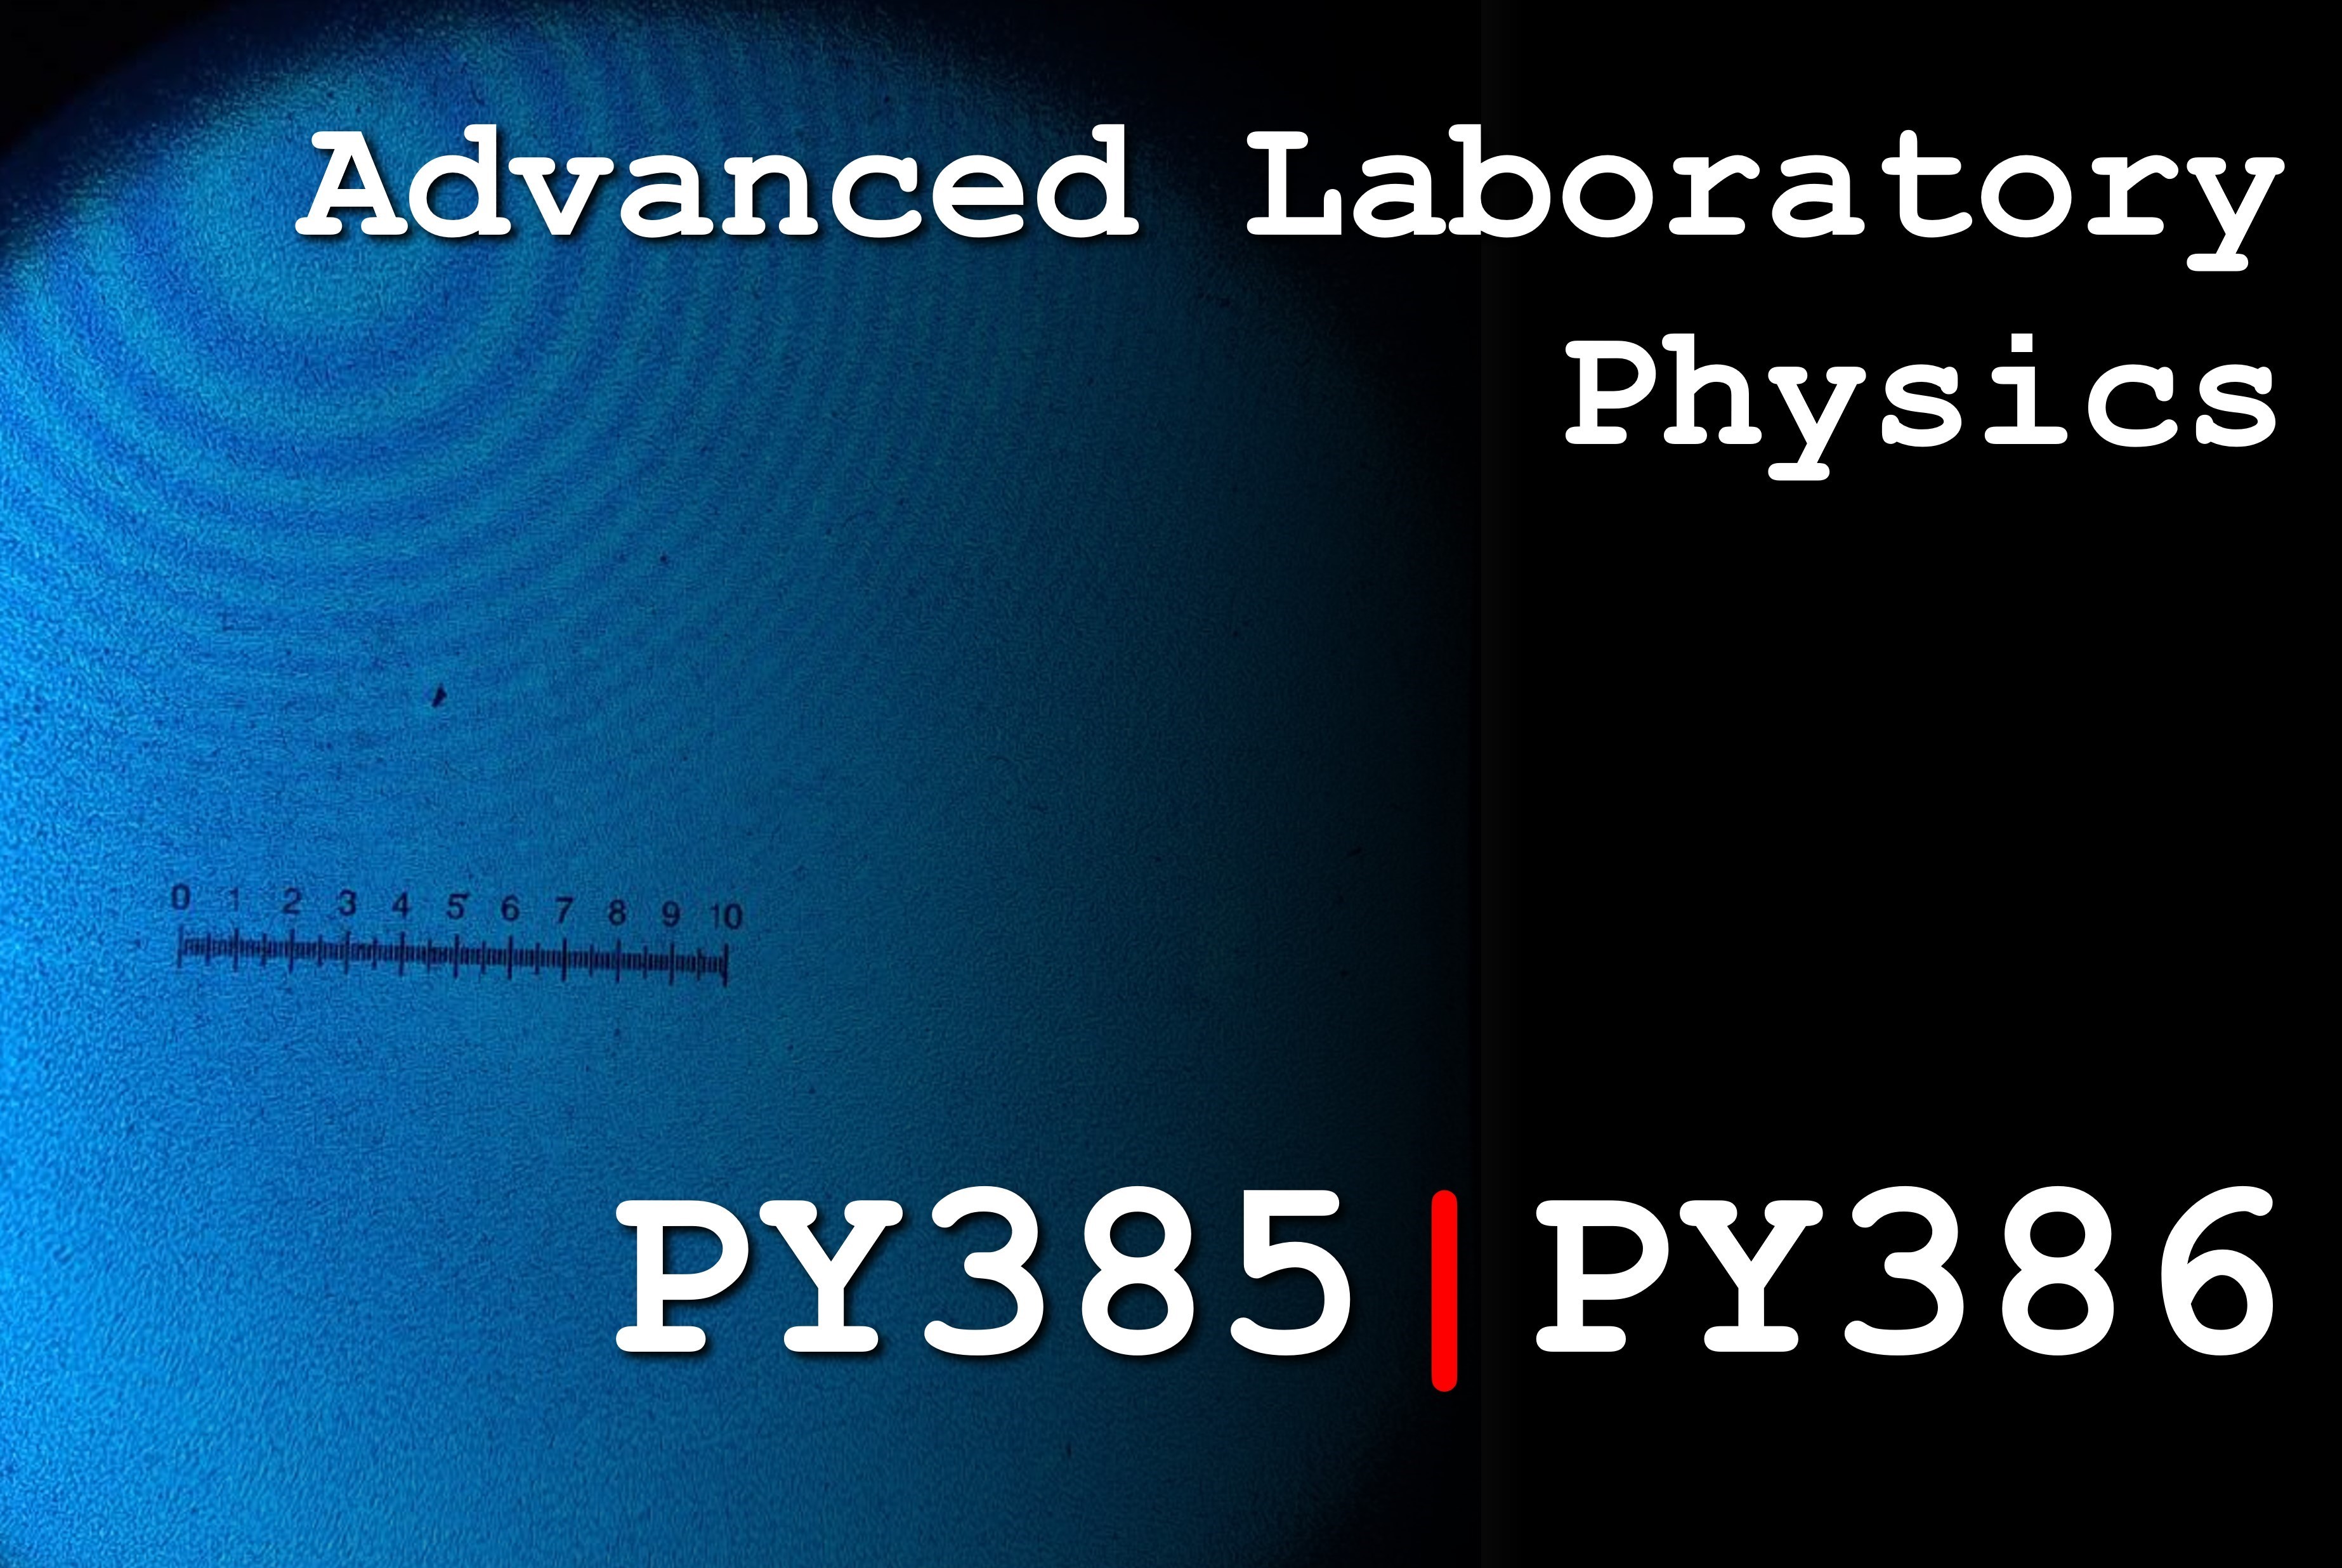 PY386 | Advanced Laboratory Physics